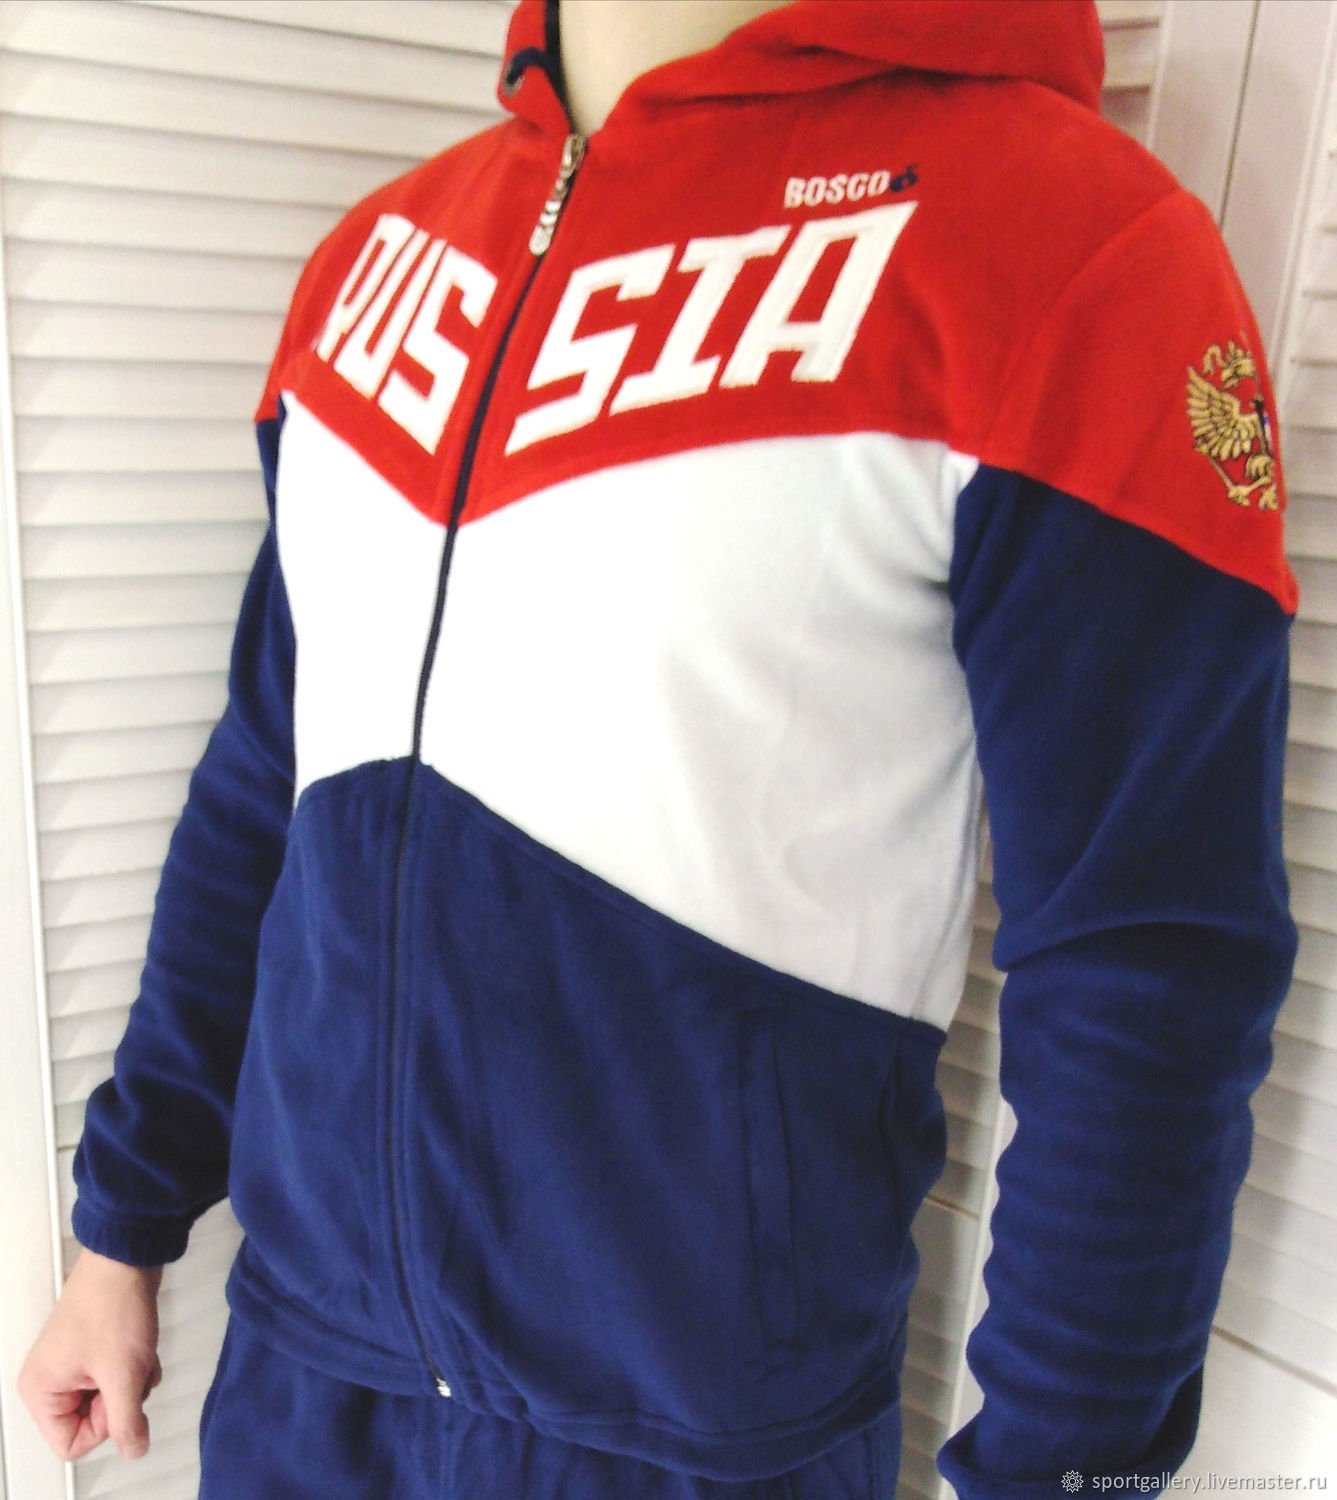 Bosco Sport Russia костюм мужской